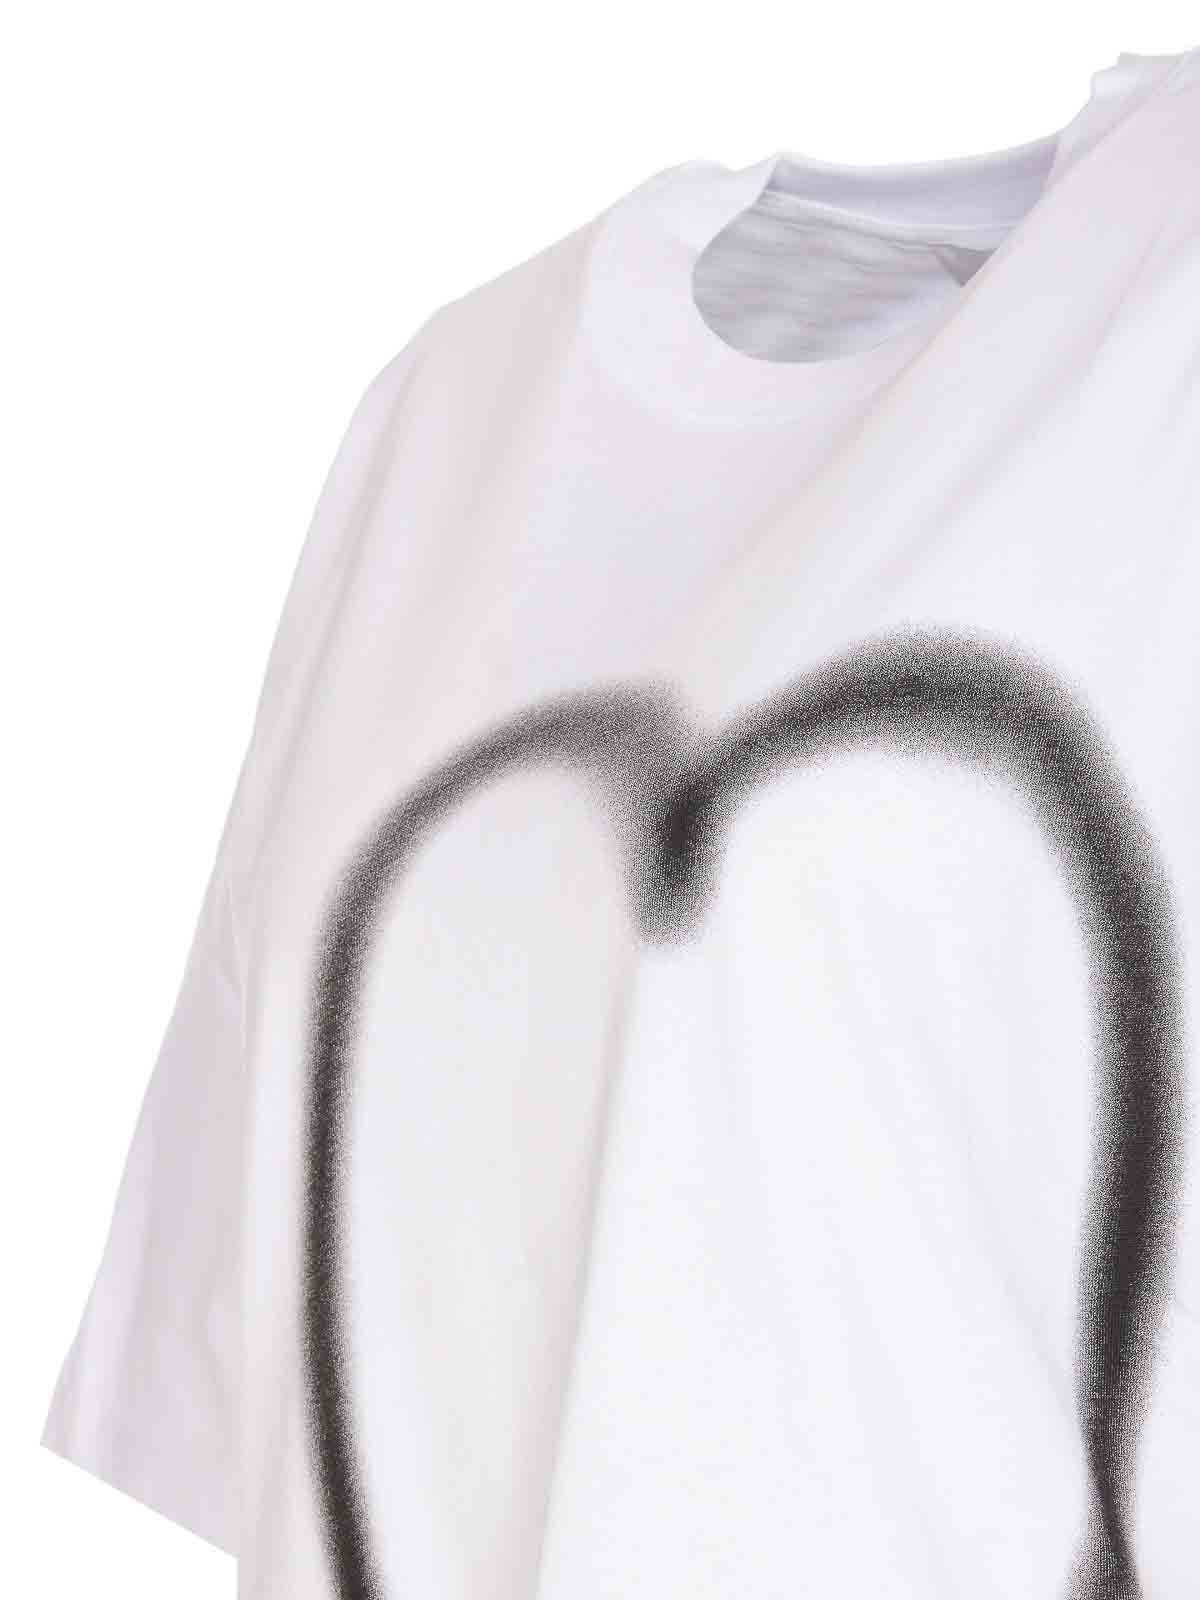 Shop Sportmax Jersey T-shirt Heart Print In White